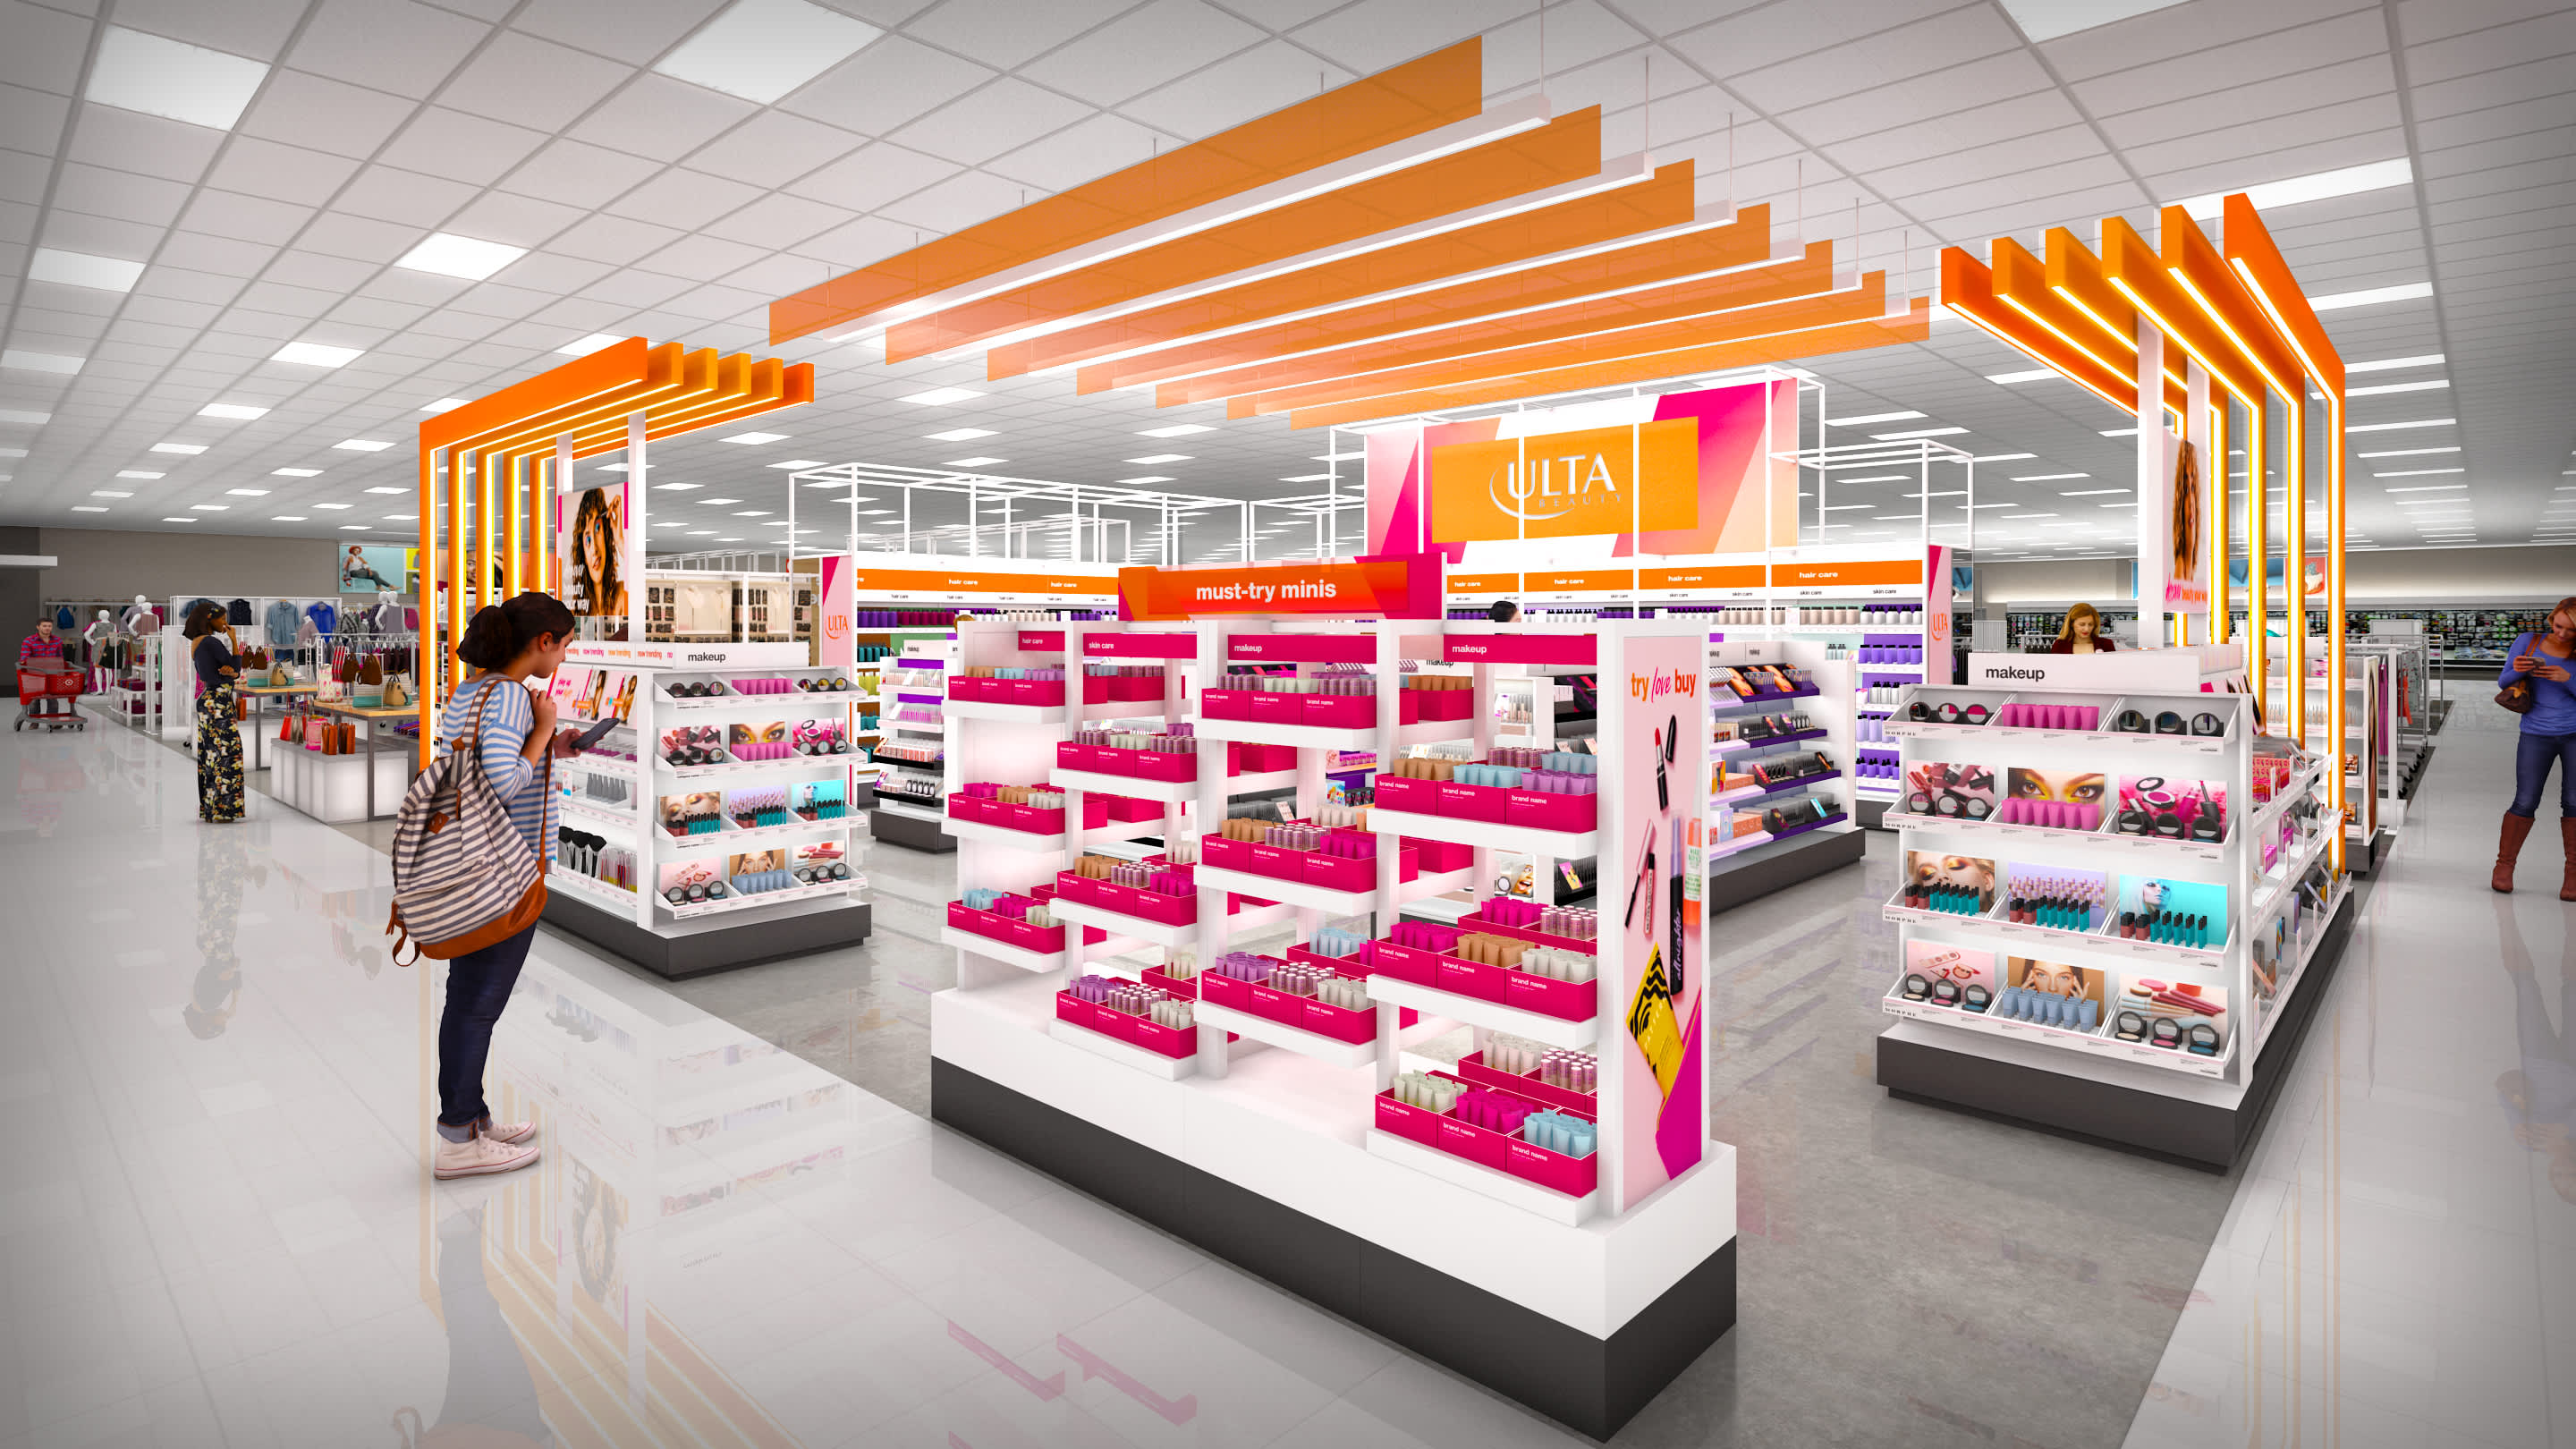 Ulta Beauty’s initial mini shops will open up in Target in August